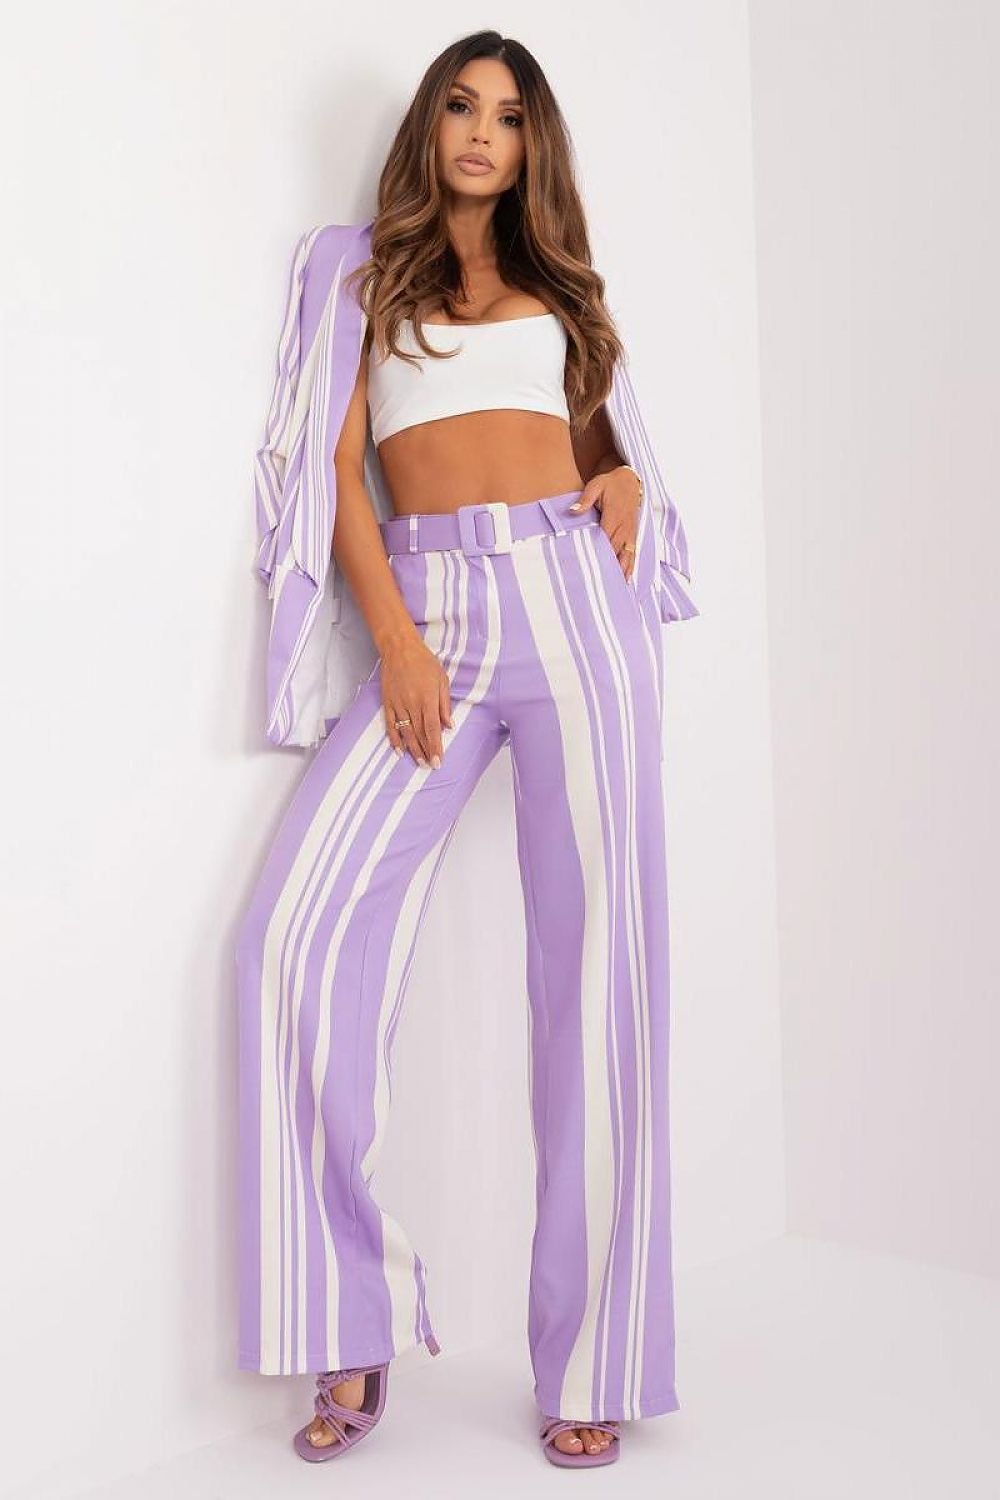 TEEK - Candy Stripe Trousers PANTS TEEK MH violet L 